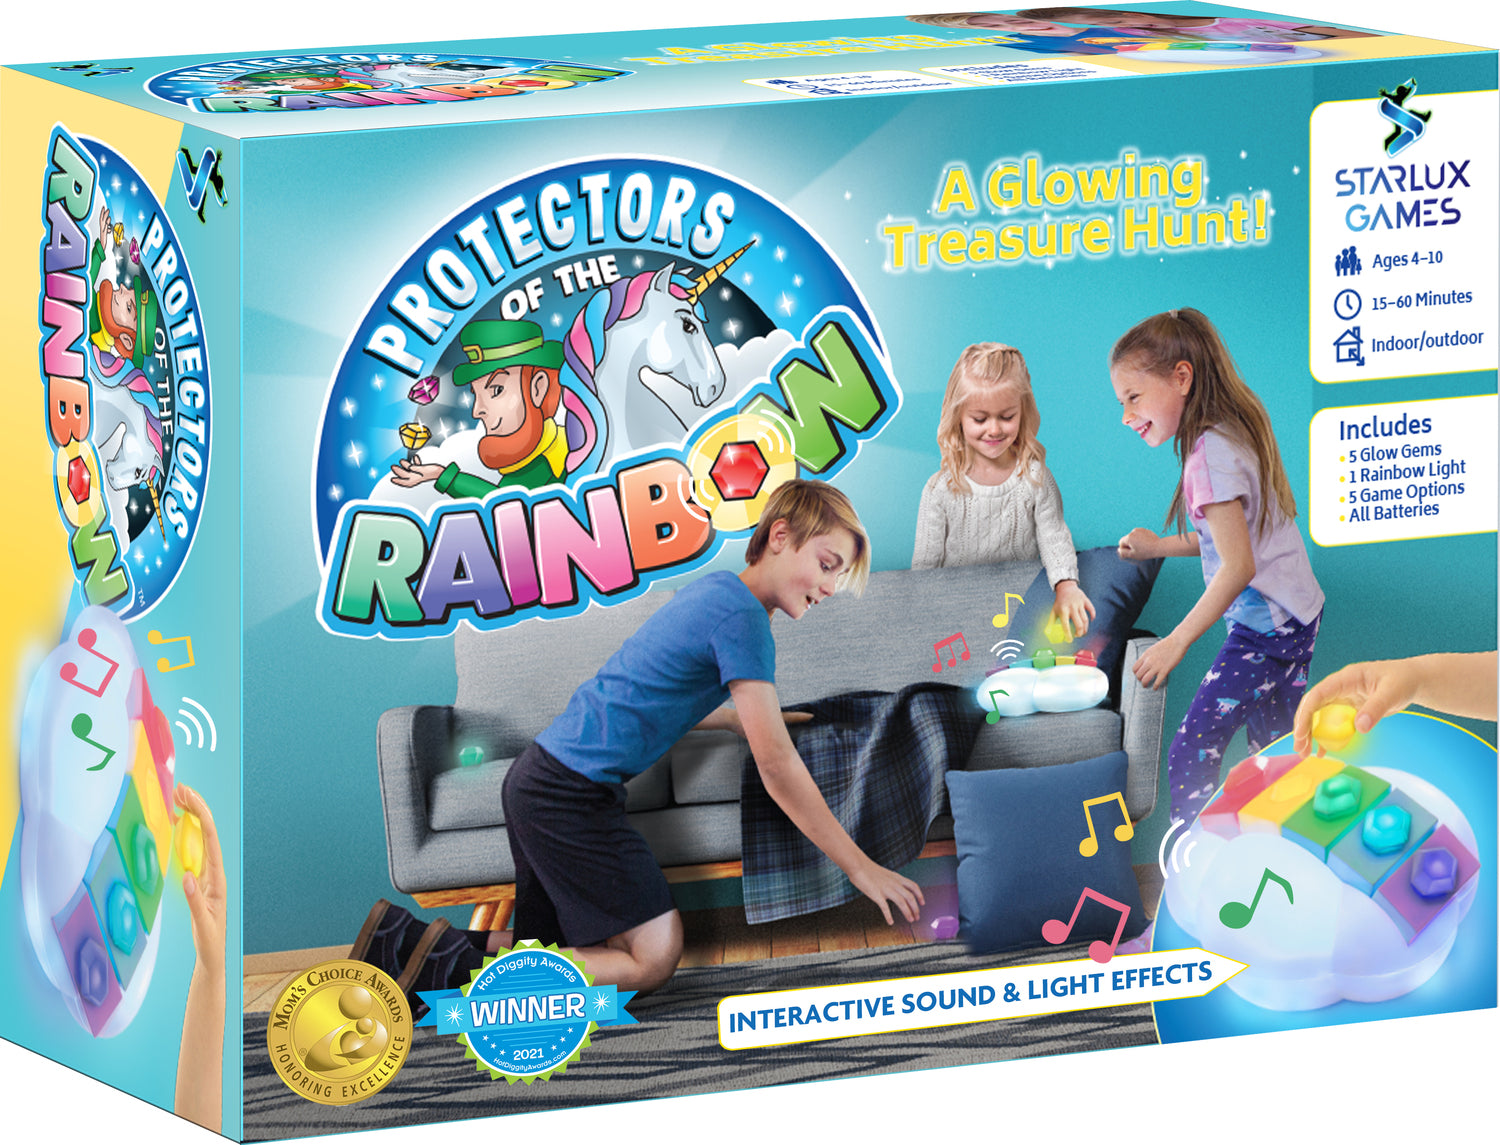 Protectors of the Rainbow: A Glowing Treasure Hunt